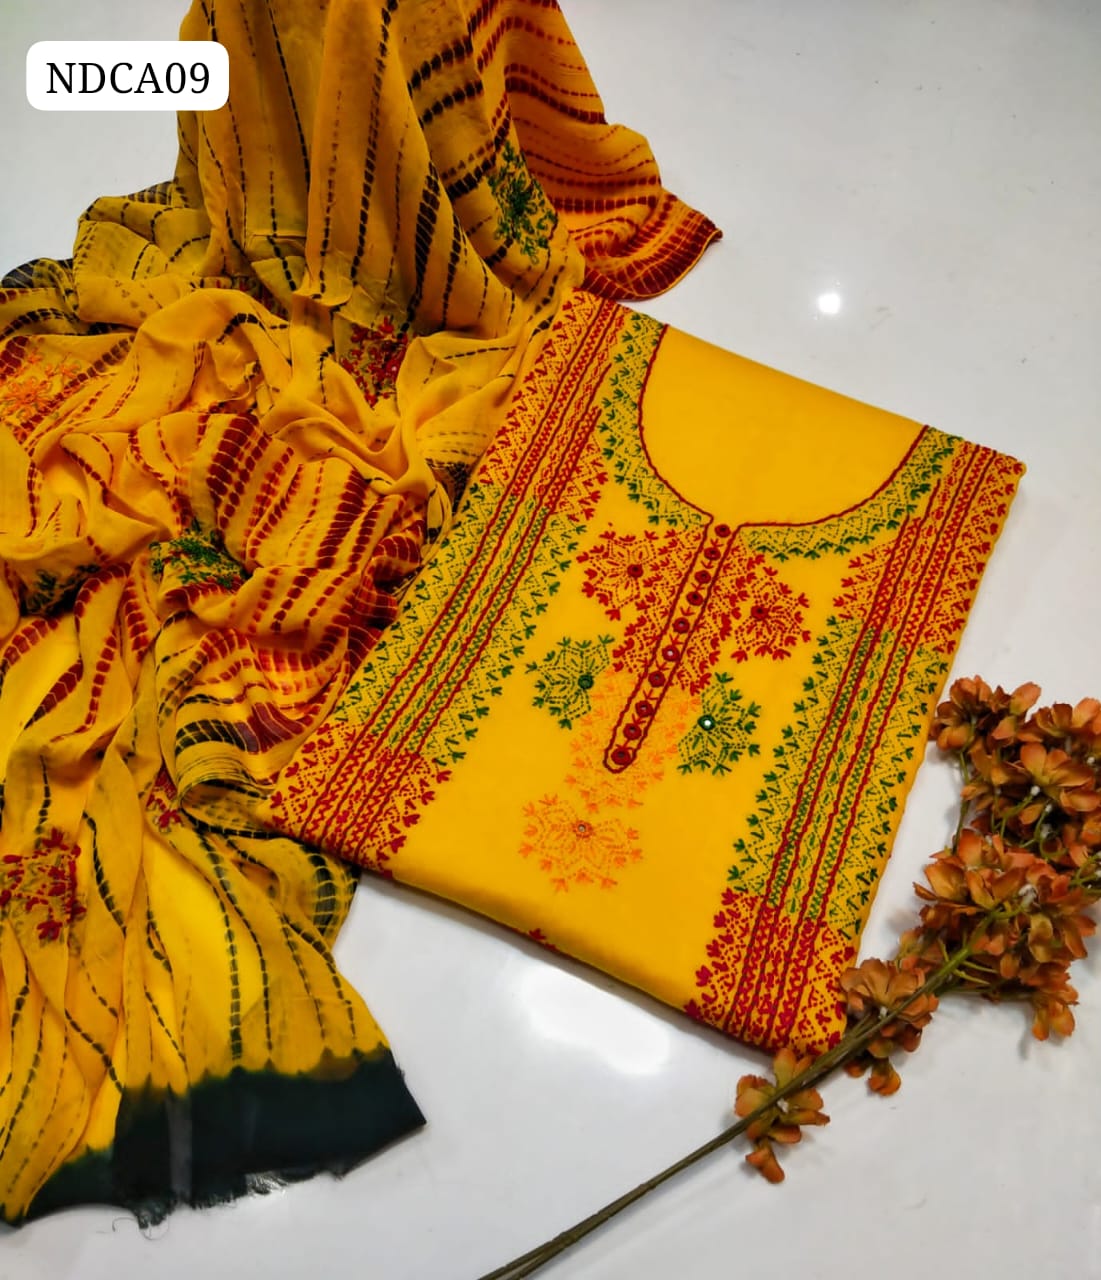 Pure Lawn Fabric Hande Made Afghani Gala Jall Neat Work Botiq Style Work Shirt With Embroidery Chiffon Crush Tei & Dei Dupatta And Plain Lawn Trouser 3Pc Dress